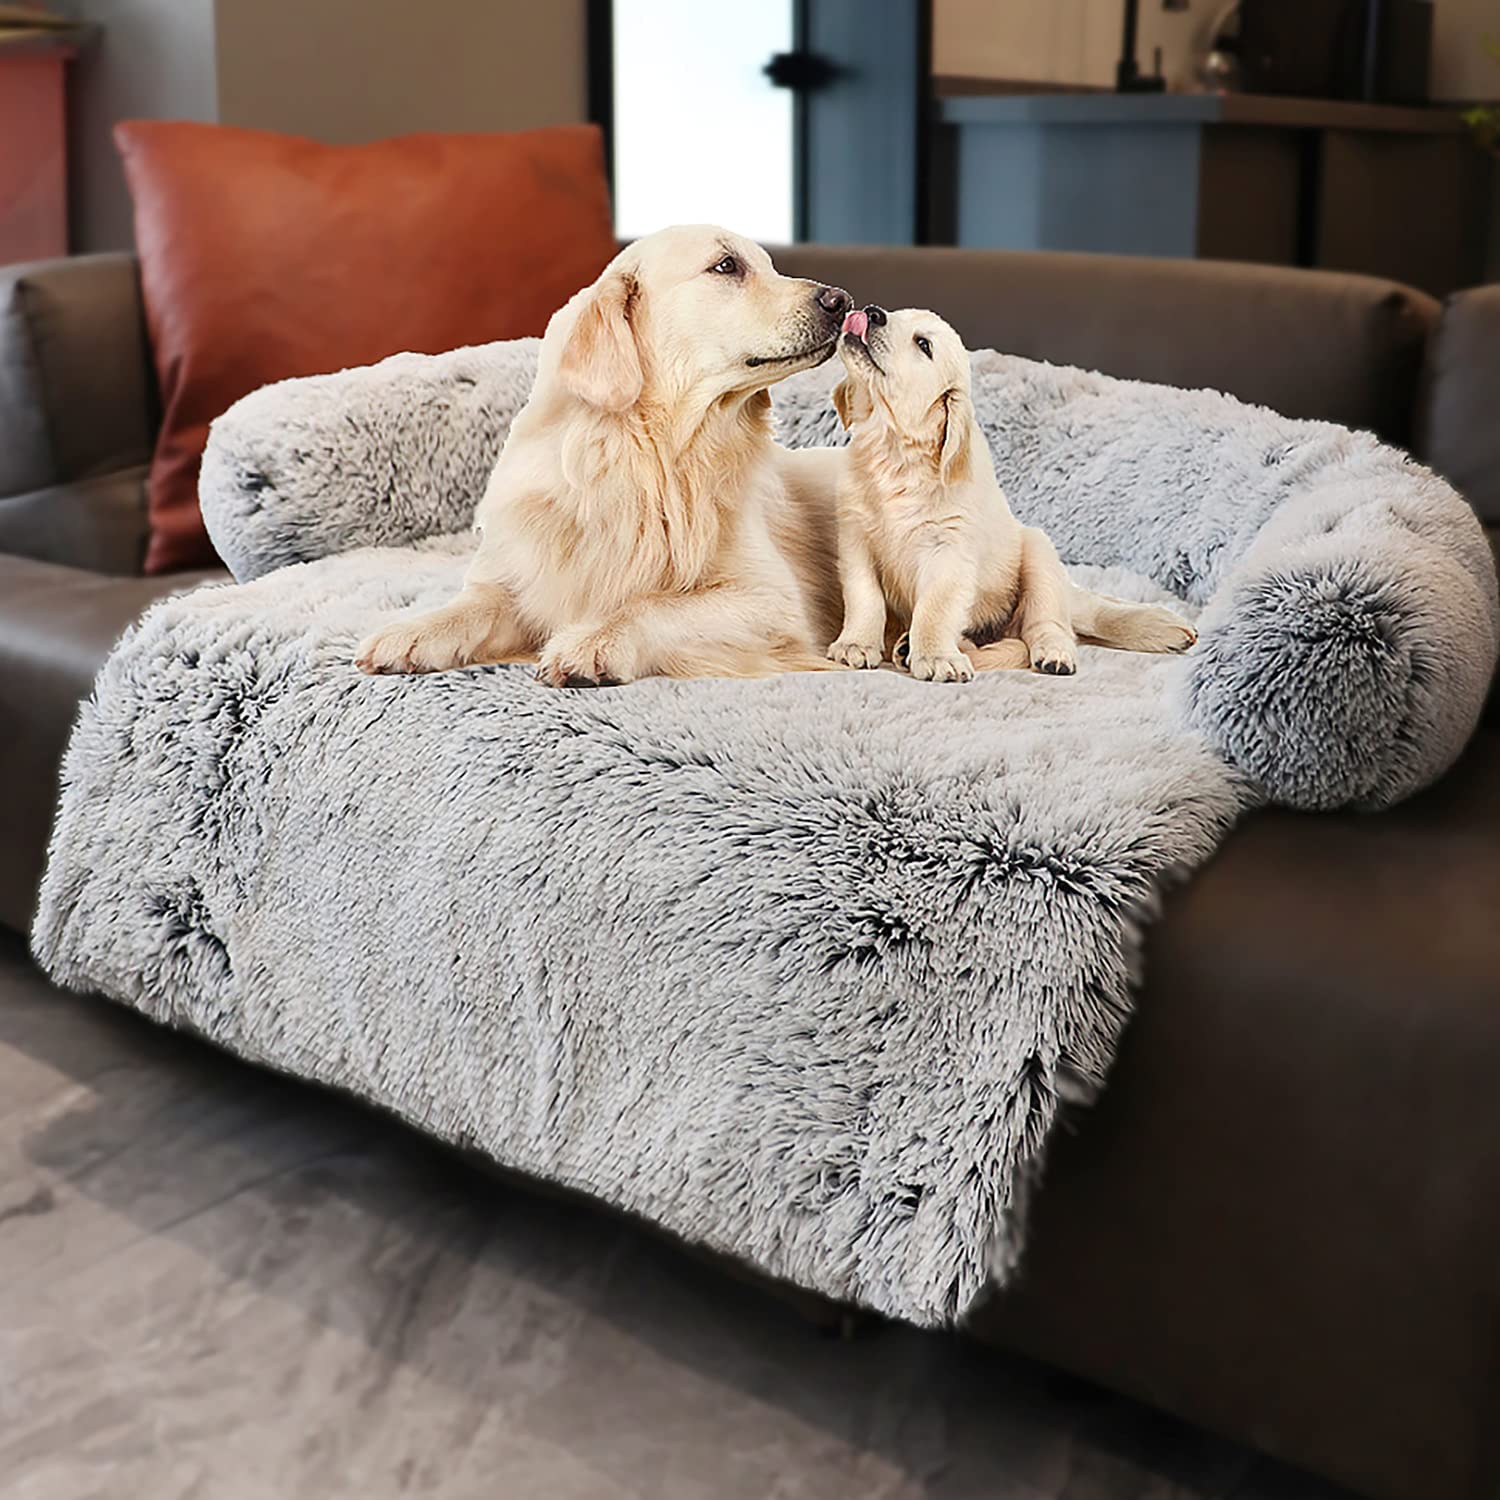 Fur Bed™ Washable Pet Bed